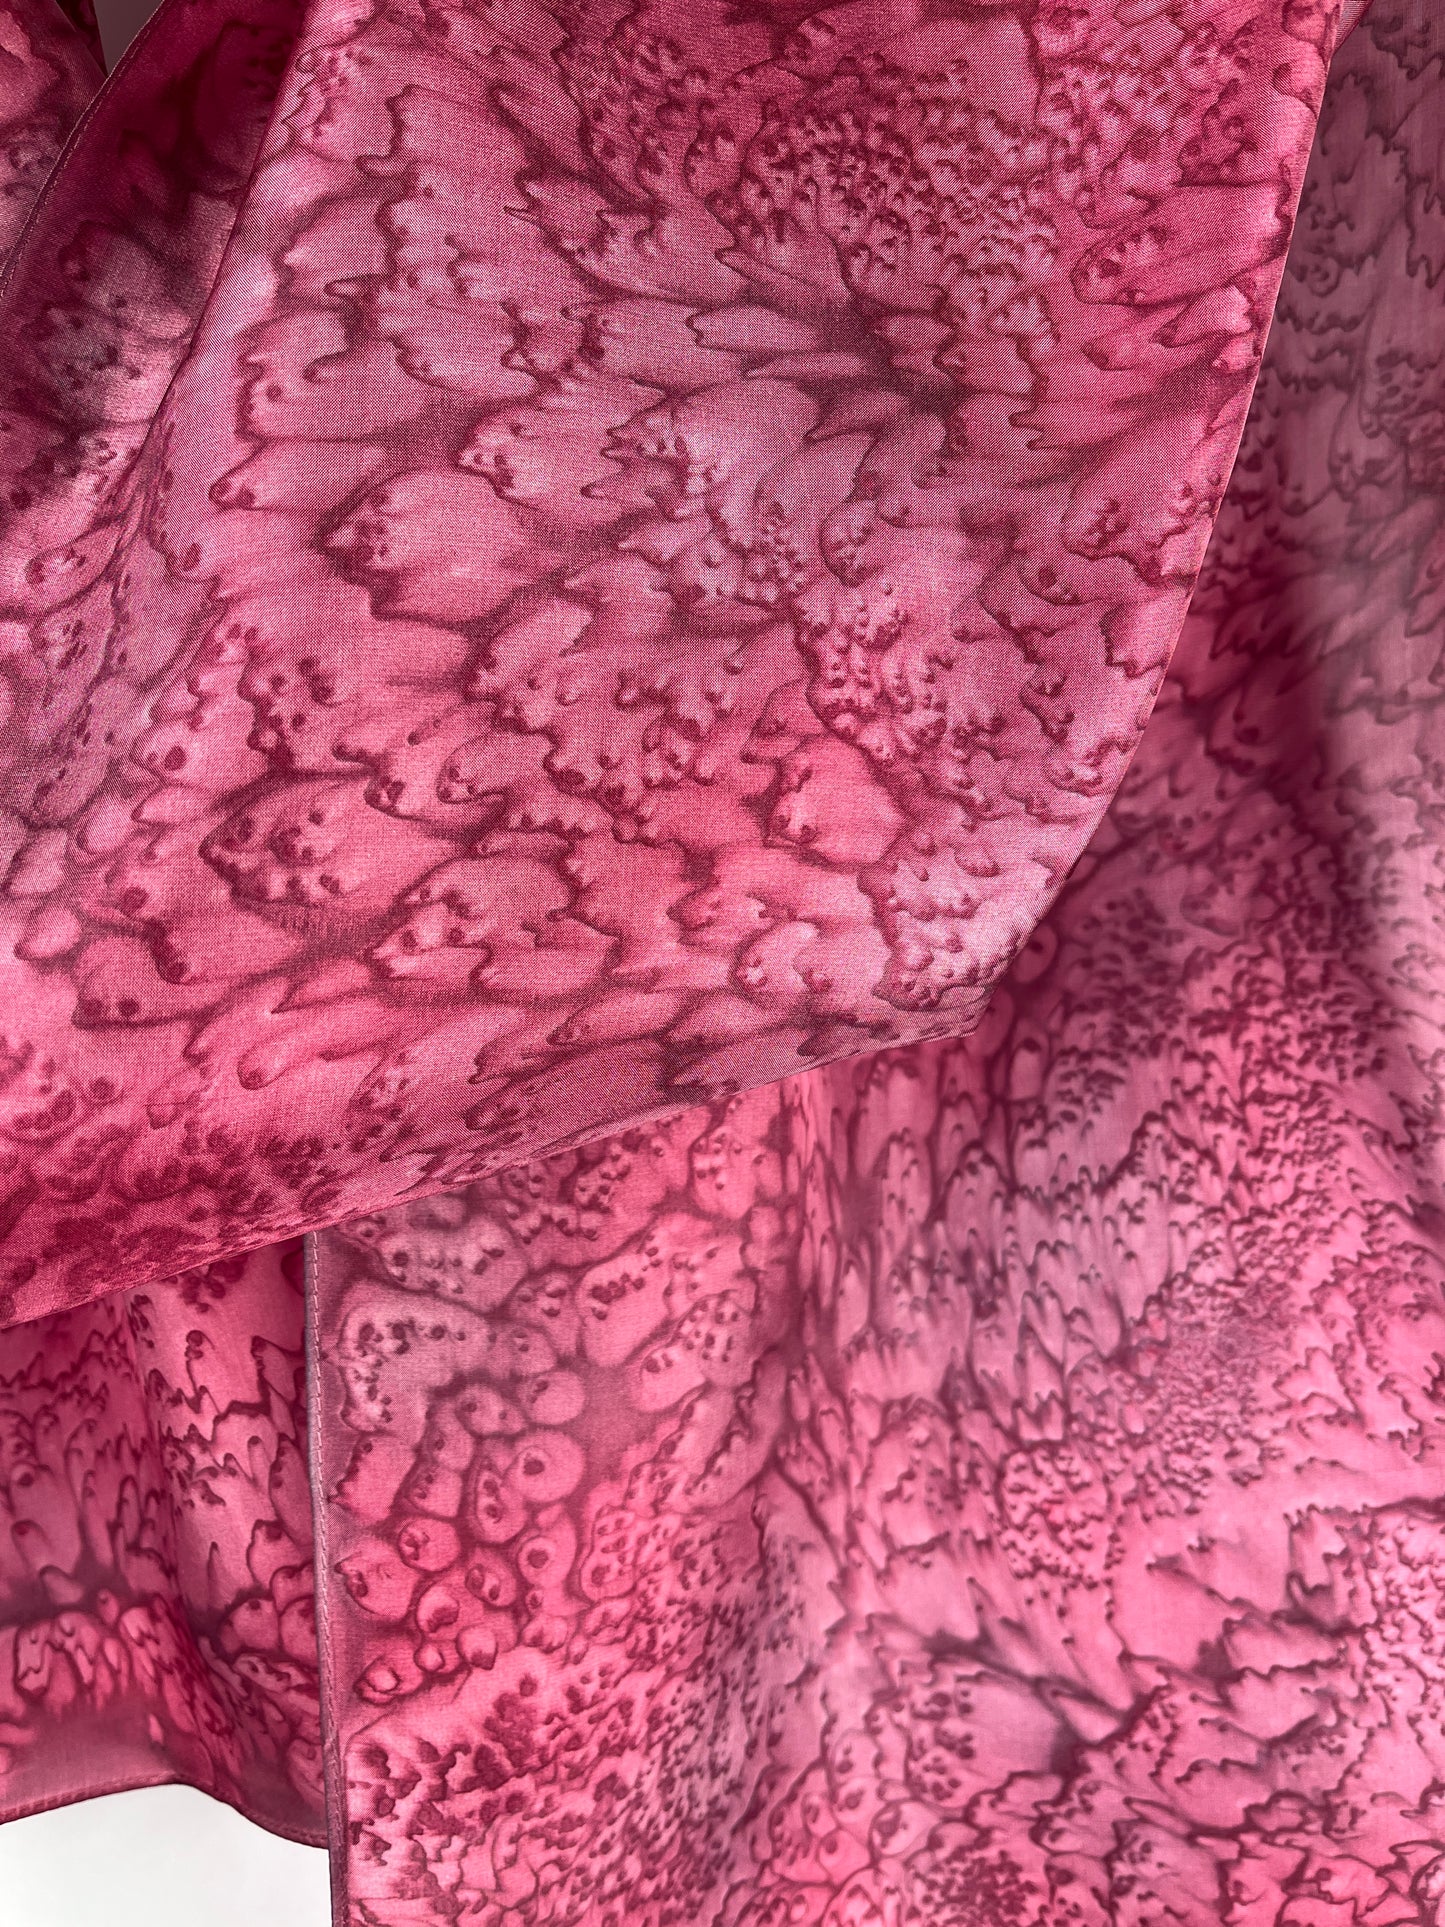 "Merlot Mermaid" - Hand-dyed Silk Scarf - $115